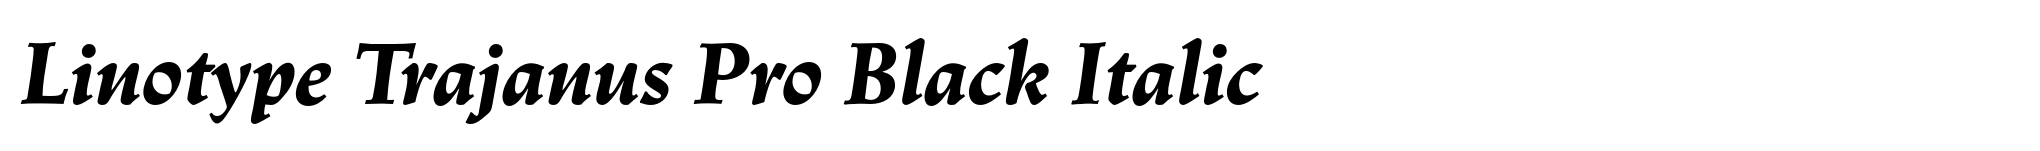 Linotype Trajanus Pro Black Italic image